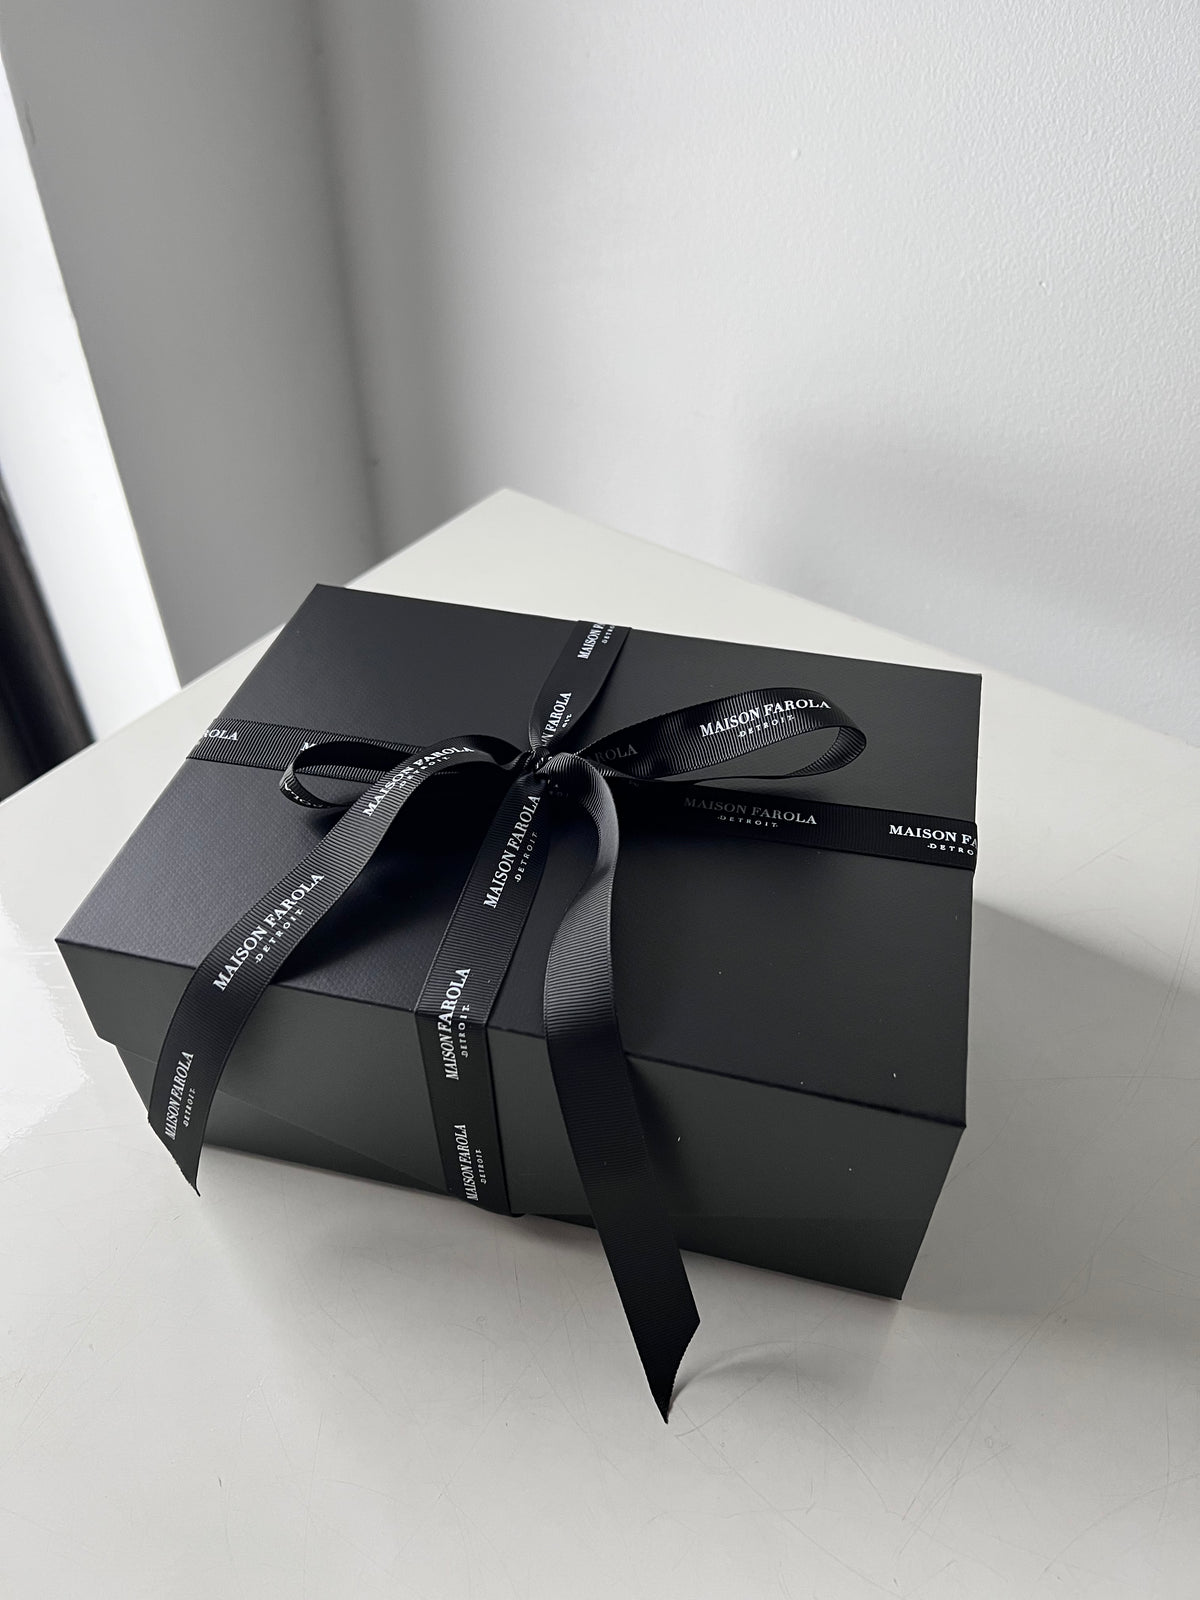 VDay Gentlemen's Gift Box - Maison Farola